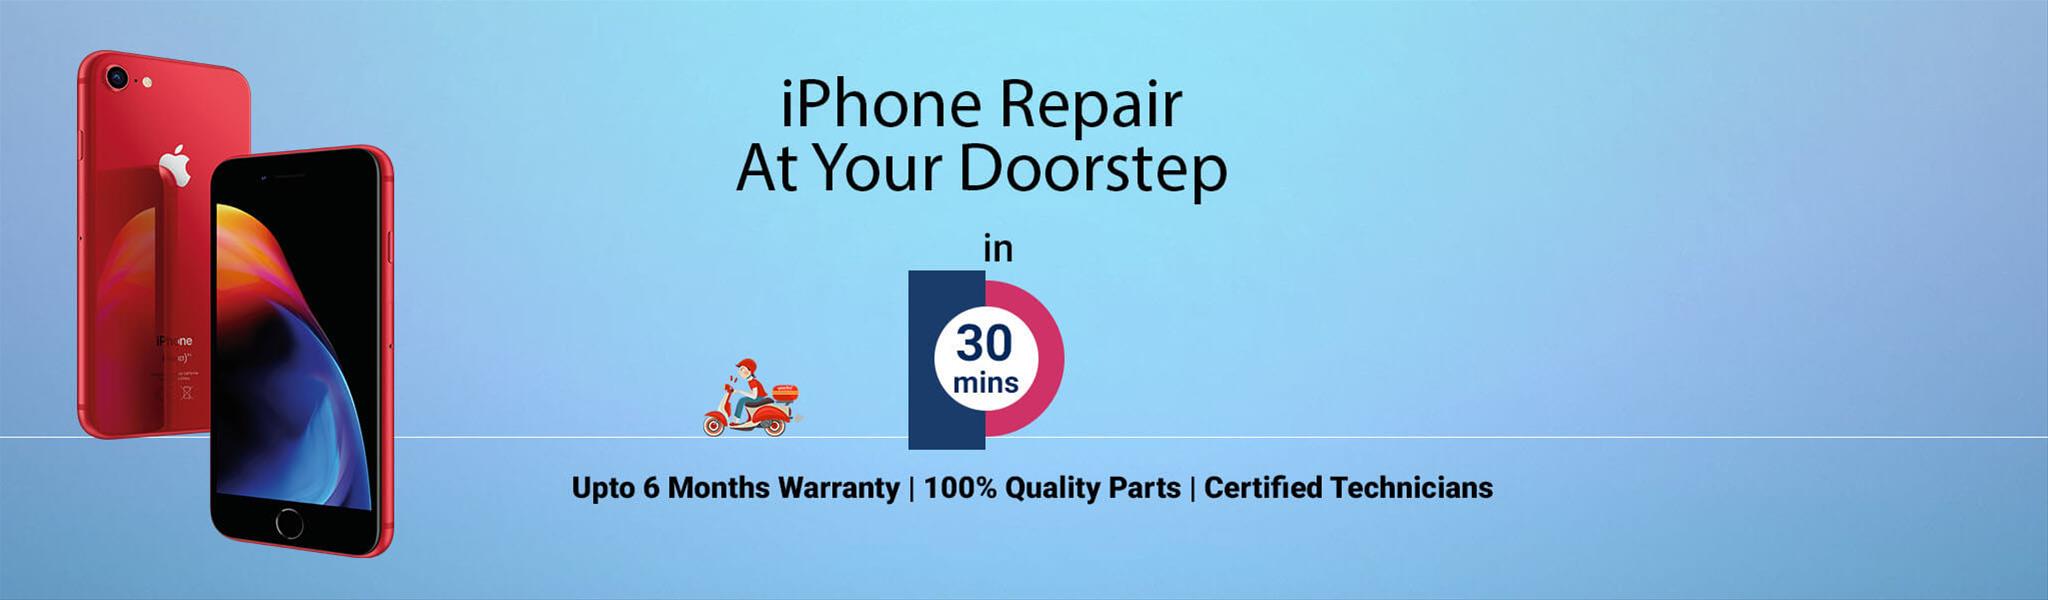 iphone-repair-service-banner-mumbai.jpg